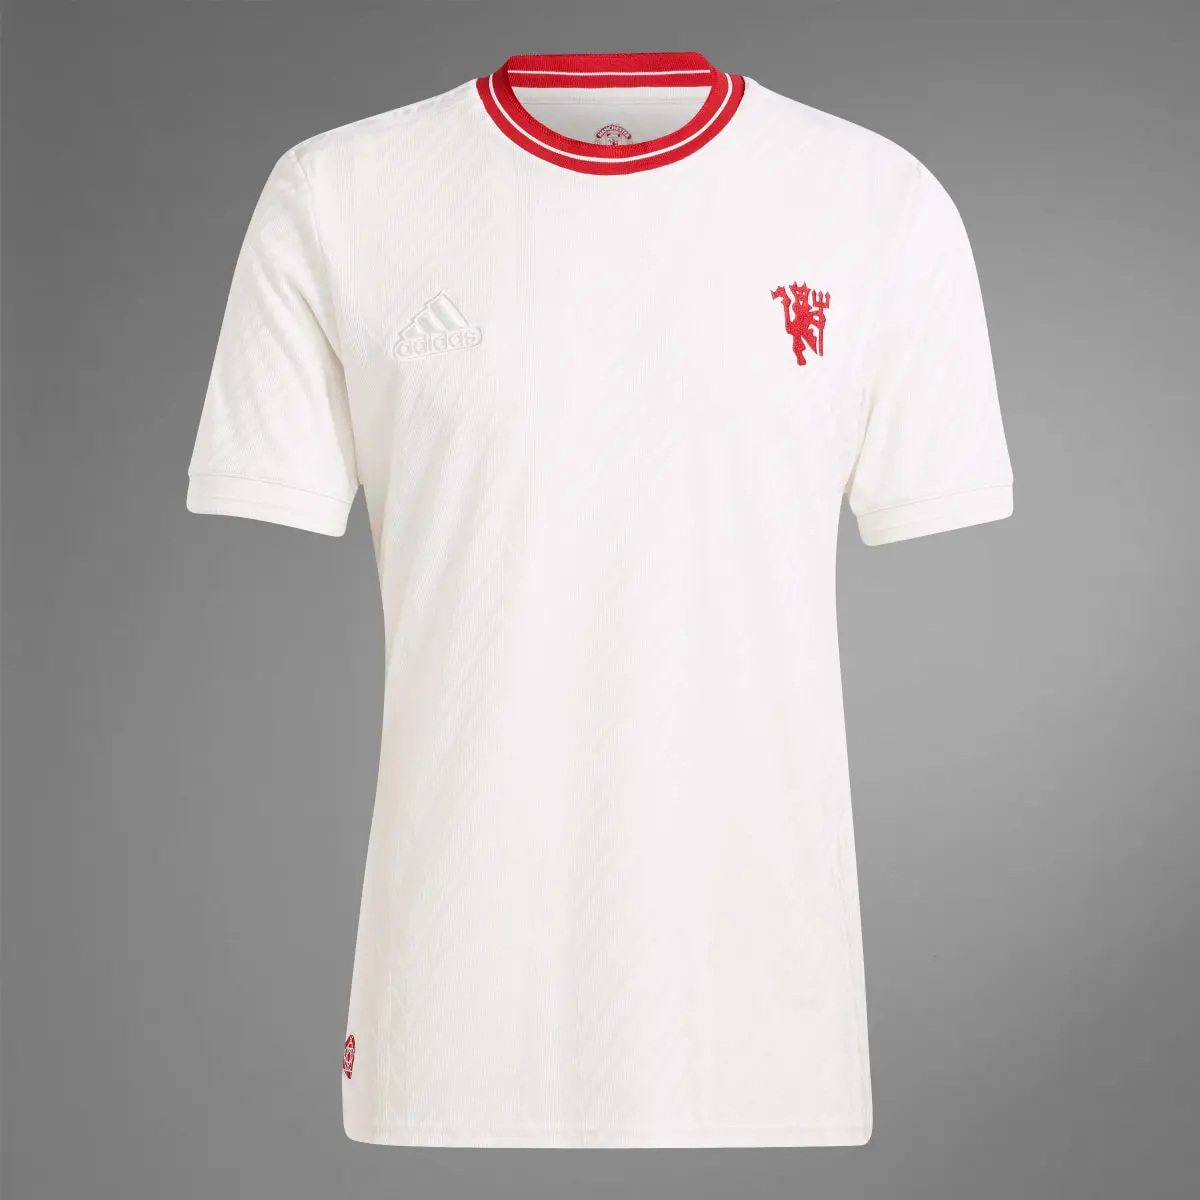 Adidas Camiseta Manchester United. 3